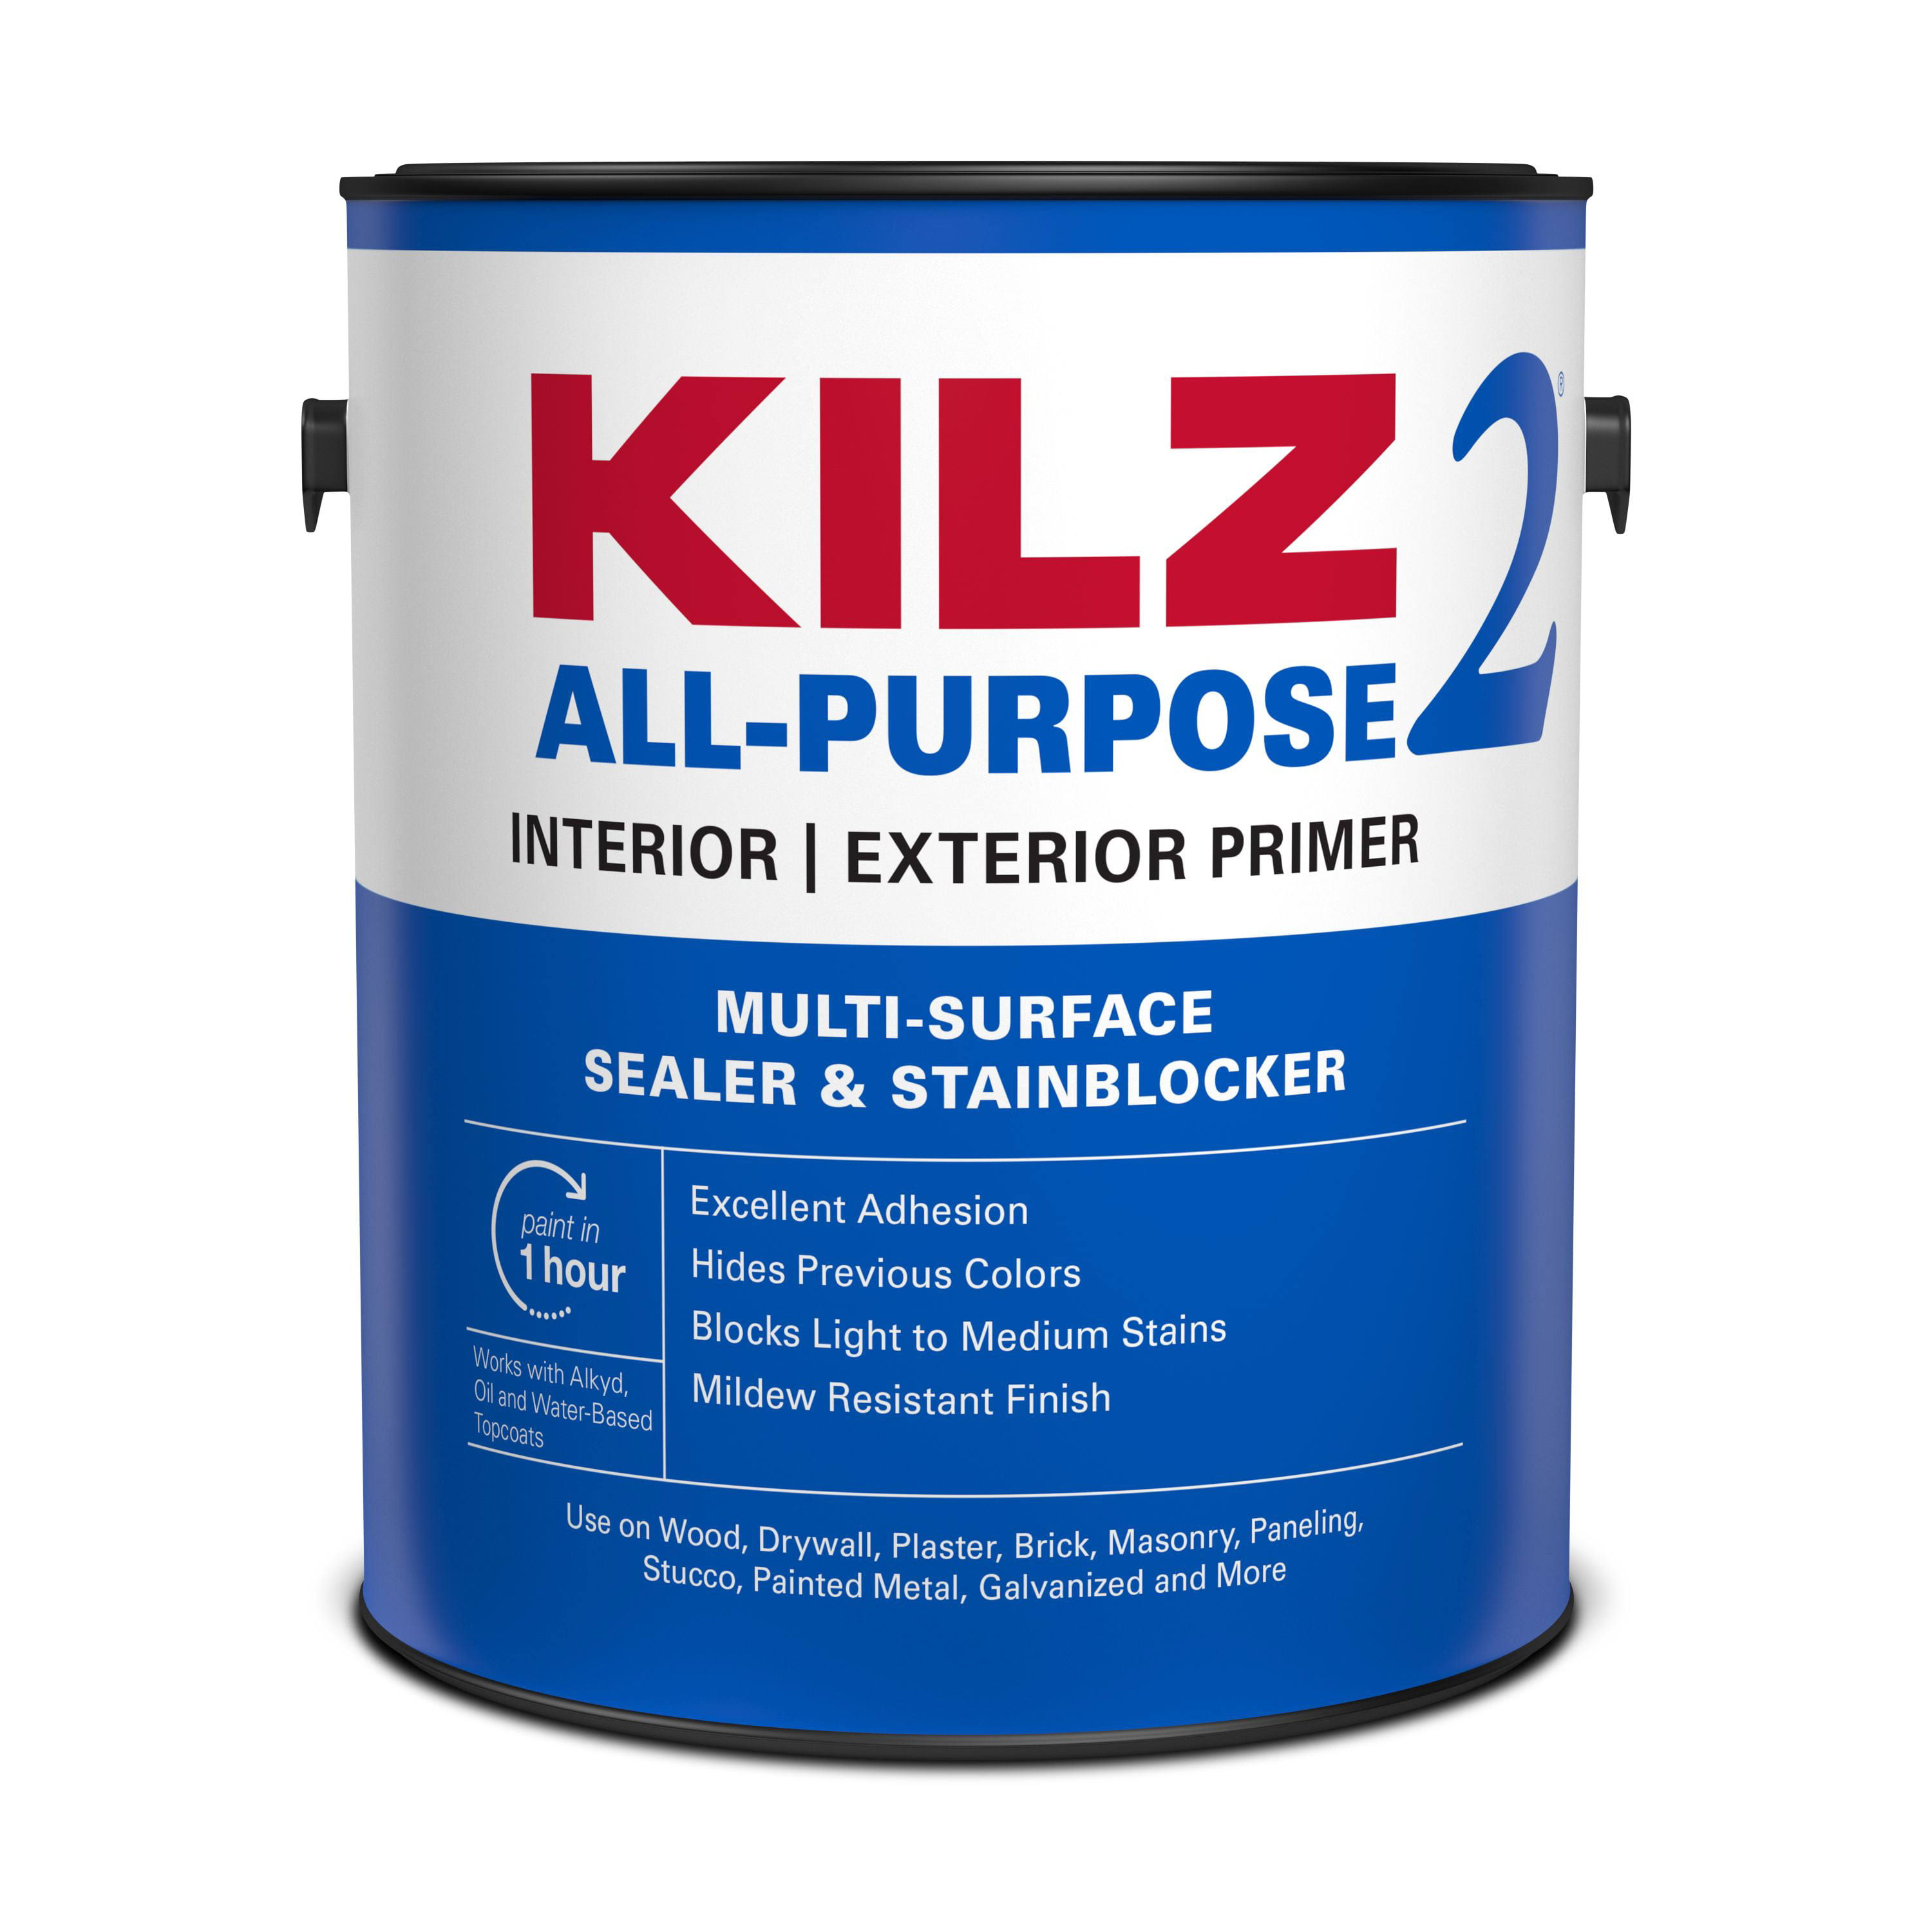 Kilz 2 Water-Based Multi-Purpose Latex Primer and Sealer - White, 1gal